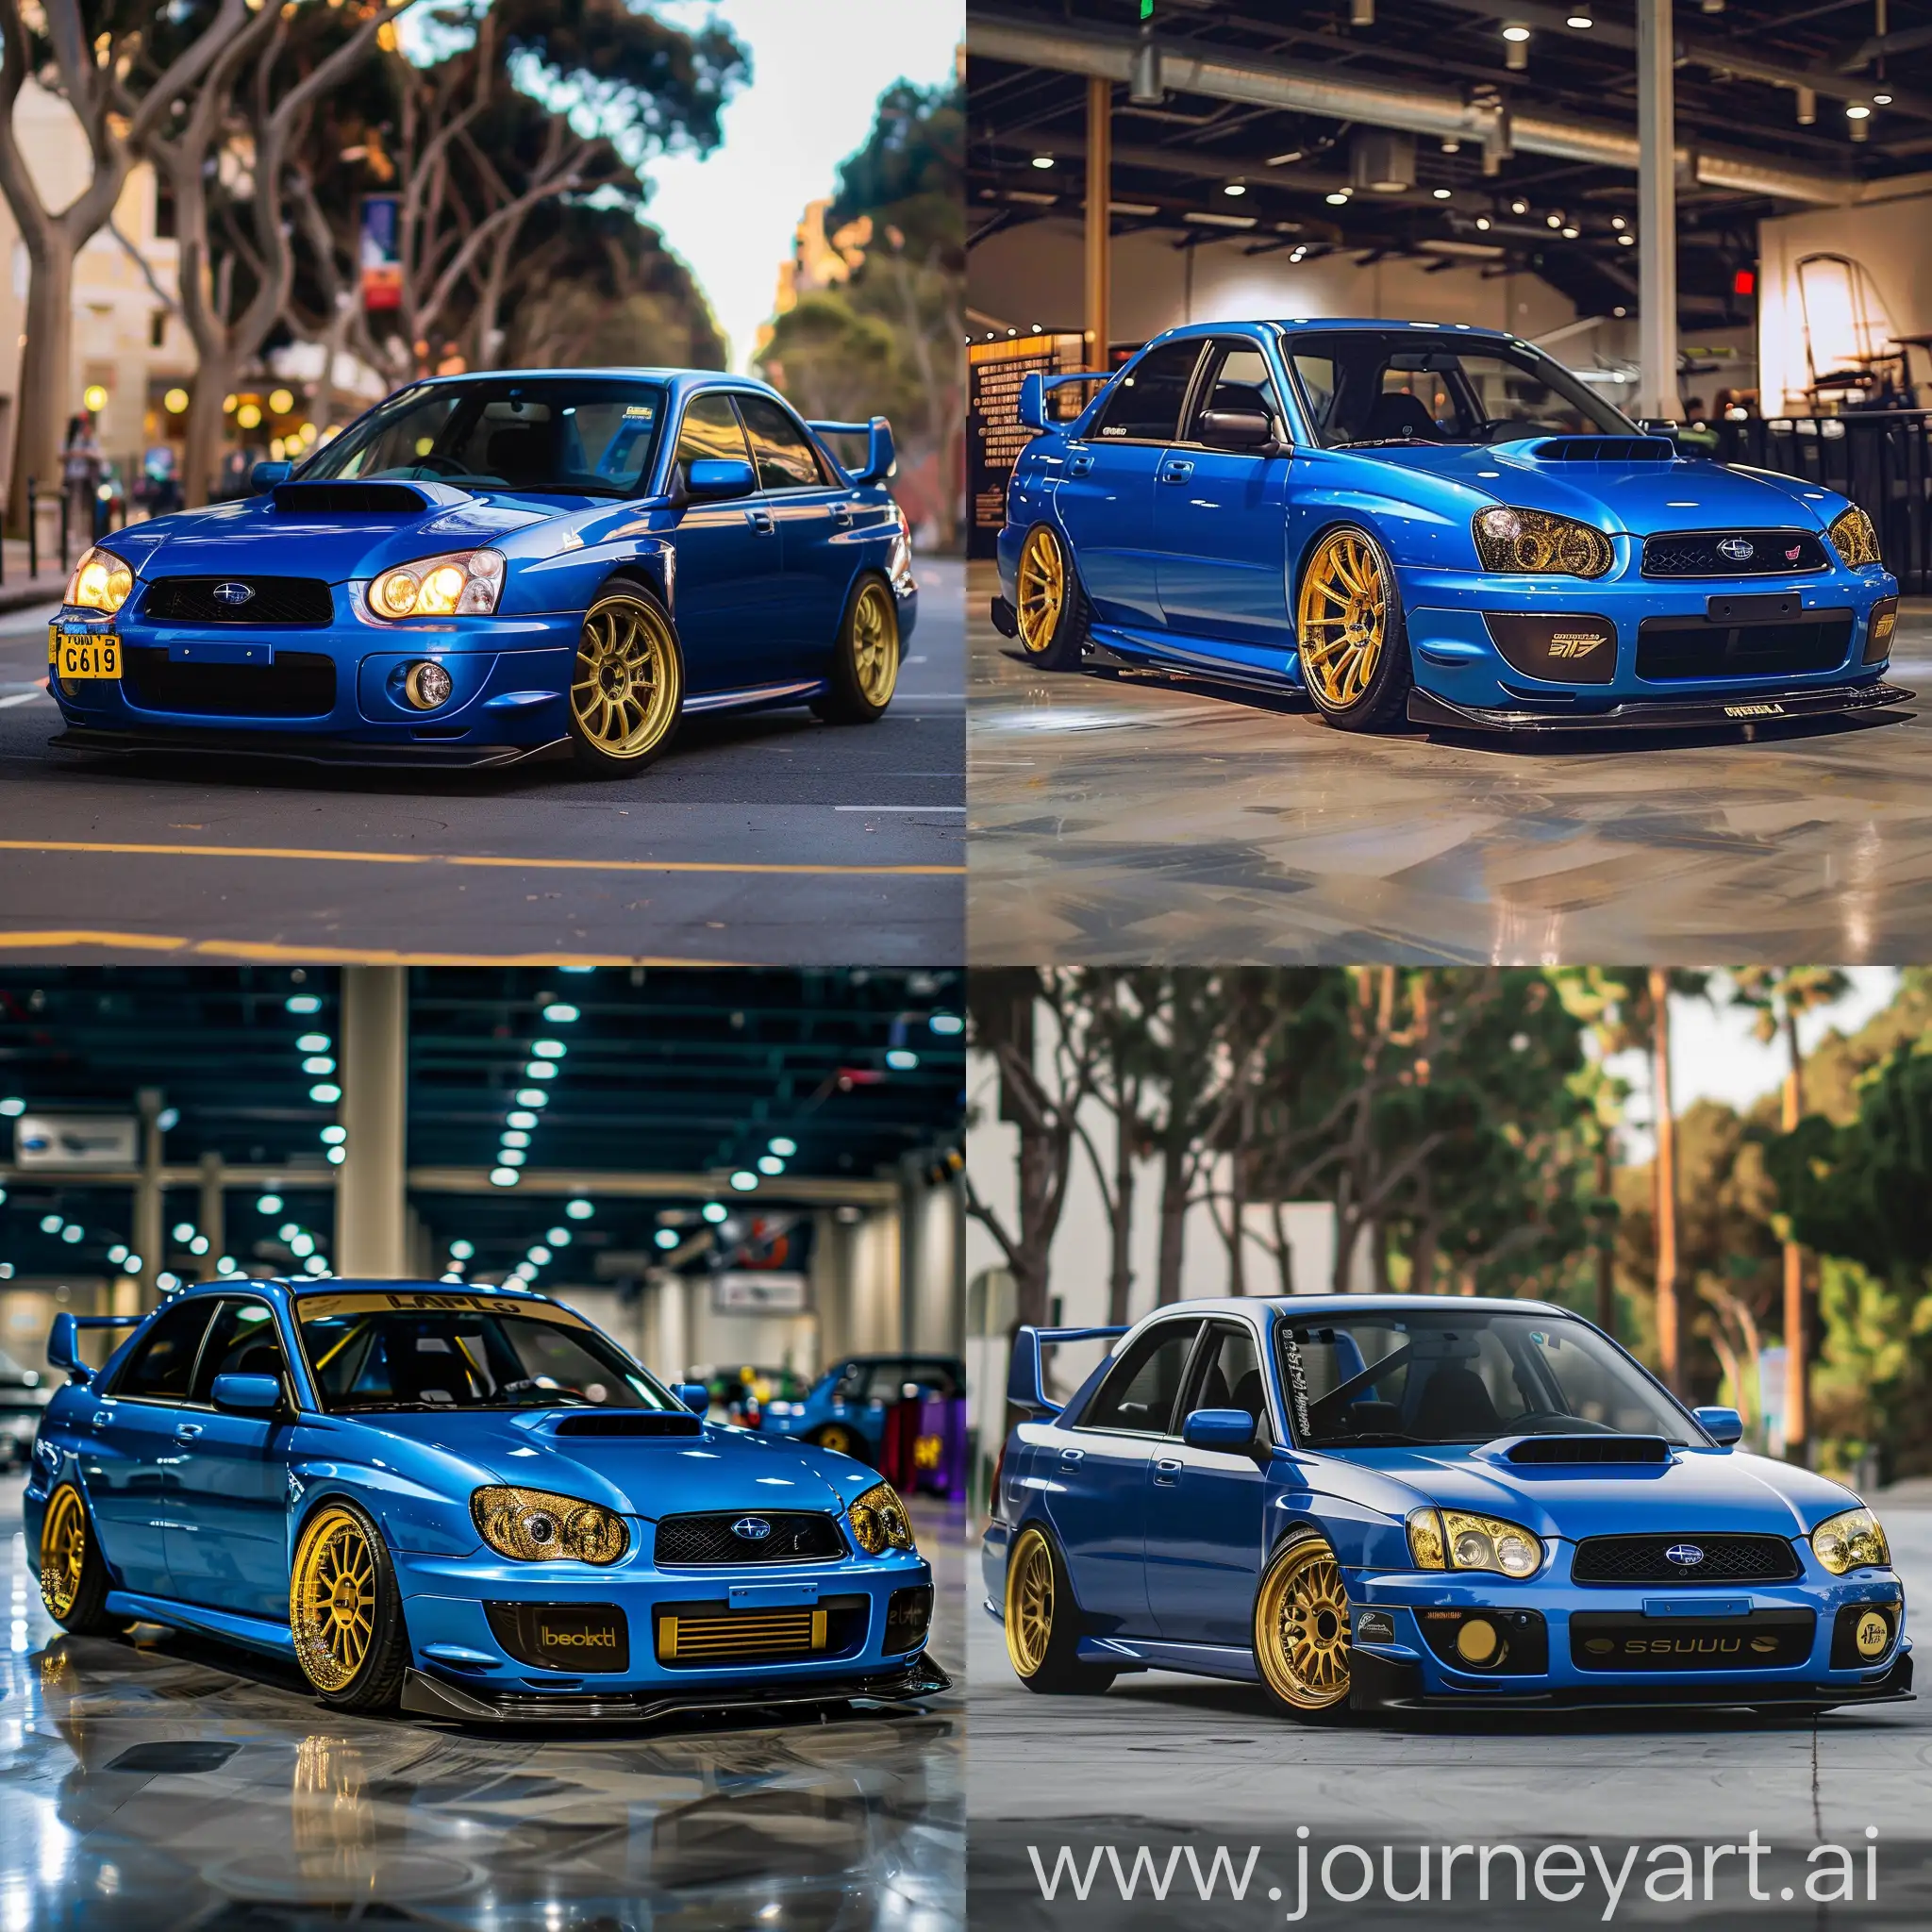 Customized-Subaru-WRX-Impreza-2004-Instagram-Wallpaper-with-Blue-Car-and-Gold-Rims